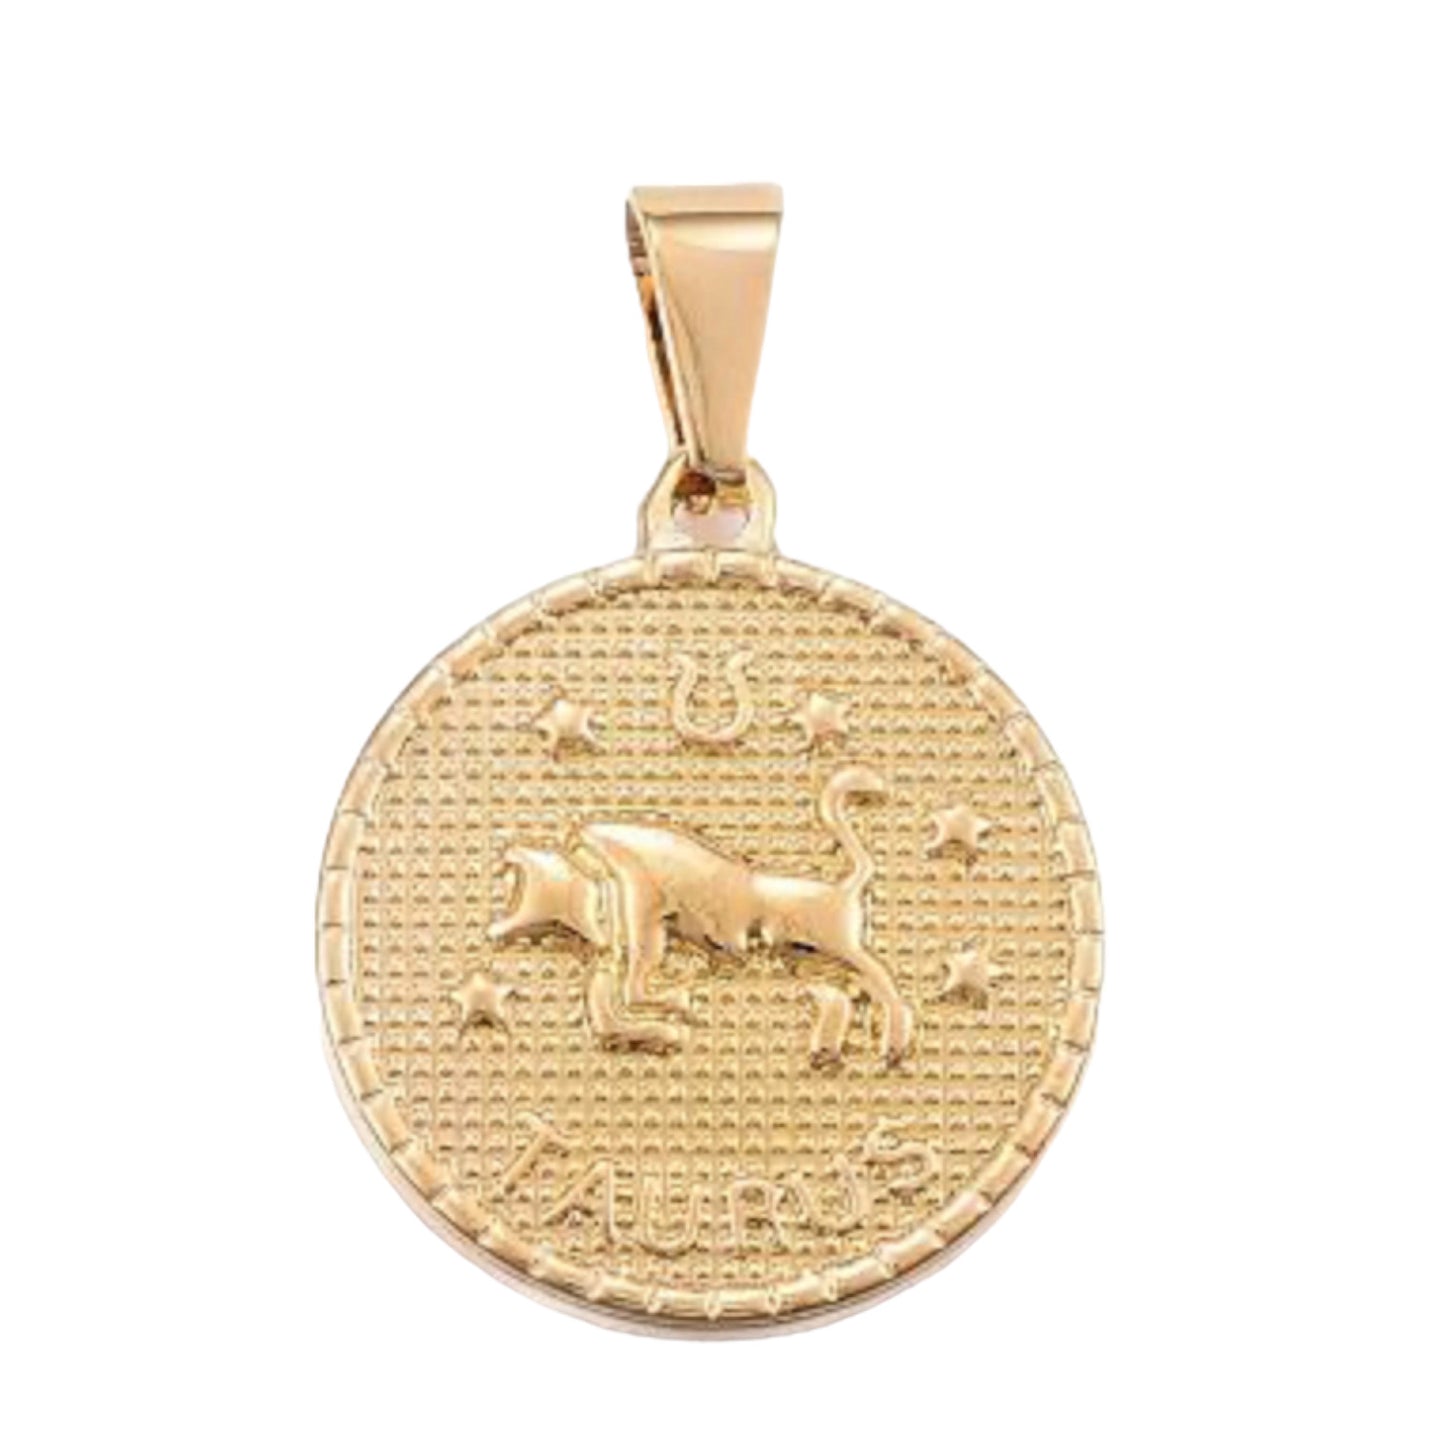 Gold Horoscope pendant